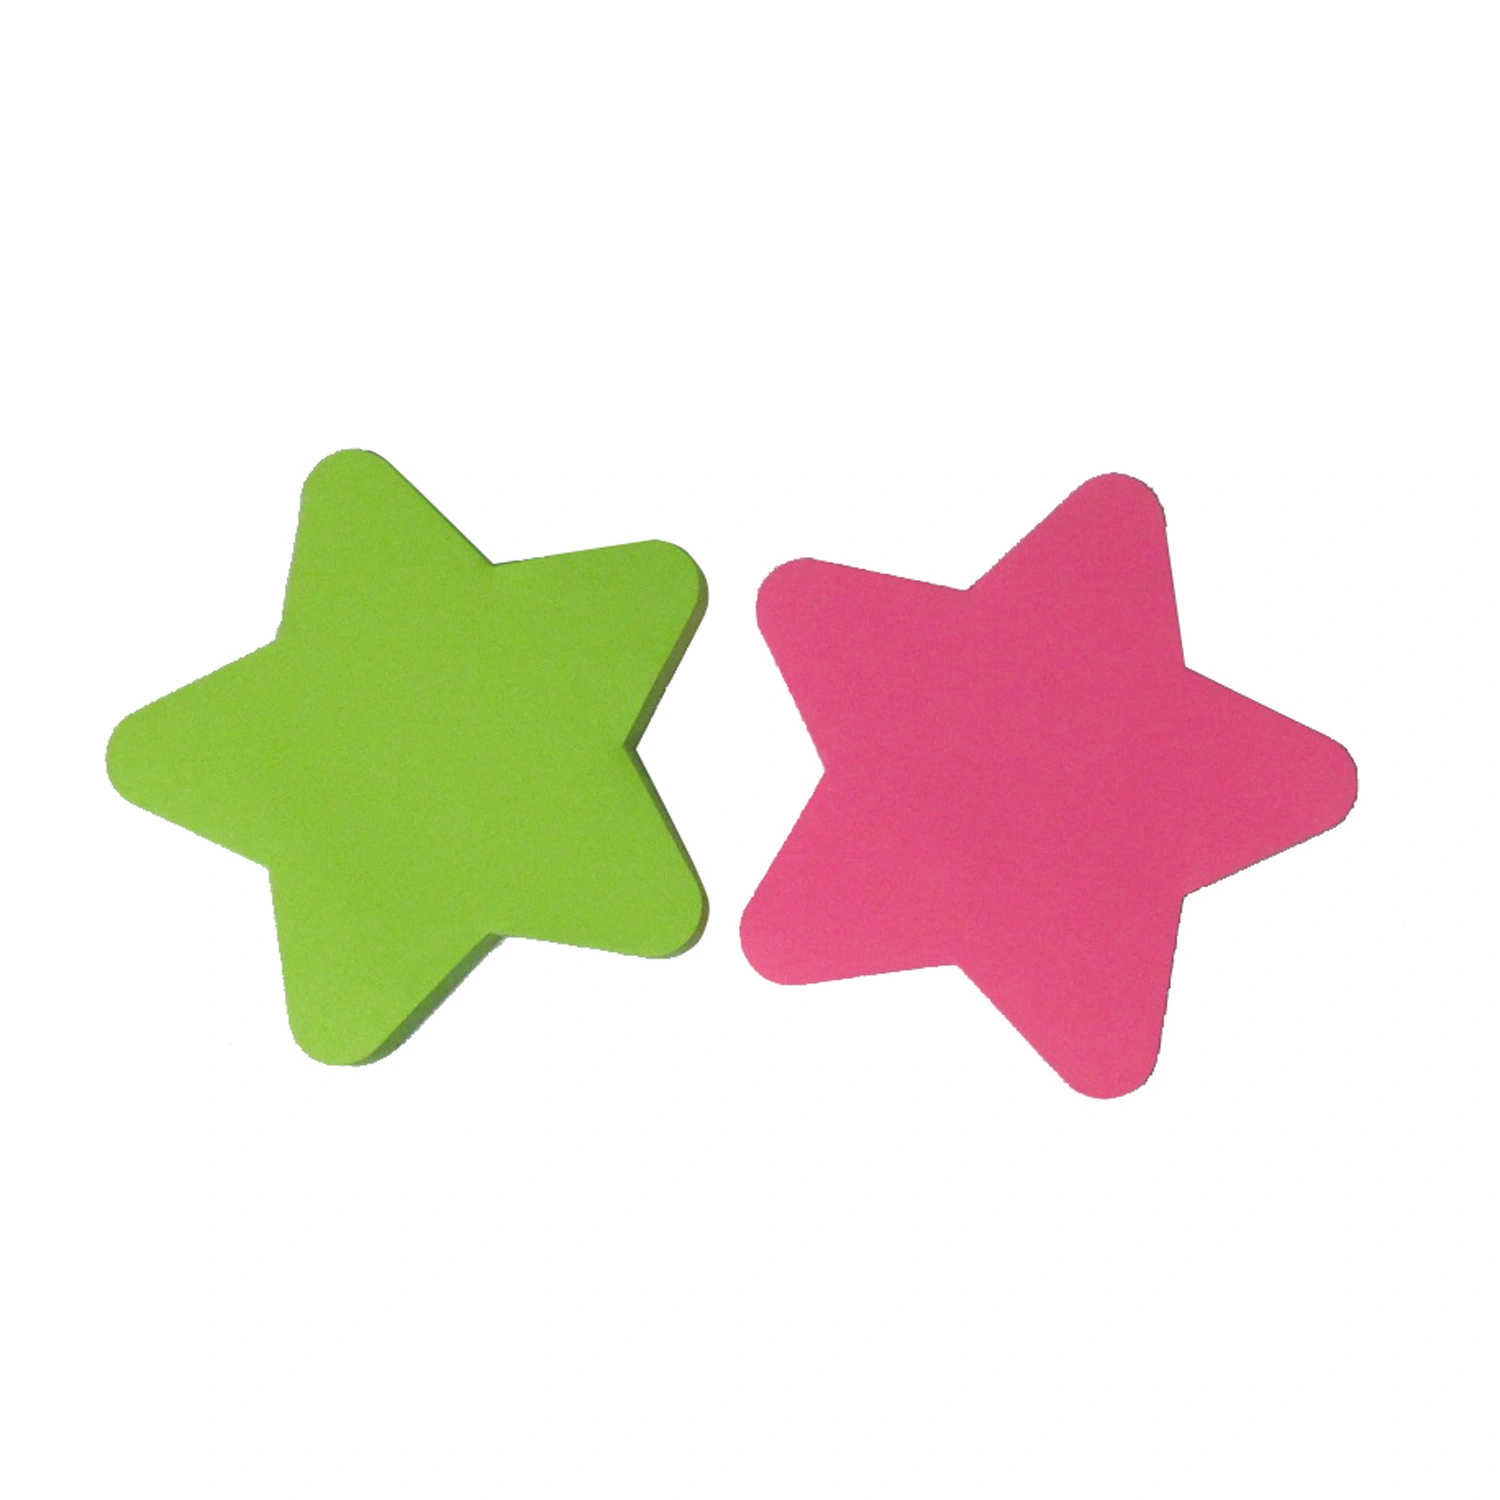 star shaped decorative sticky notes pad china factory